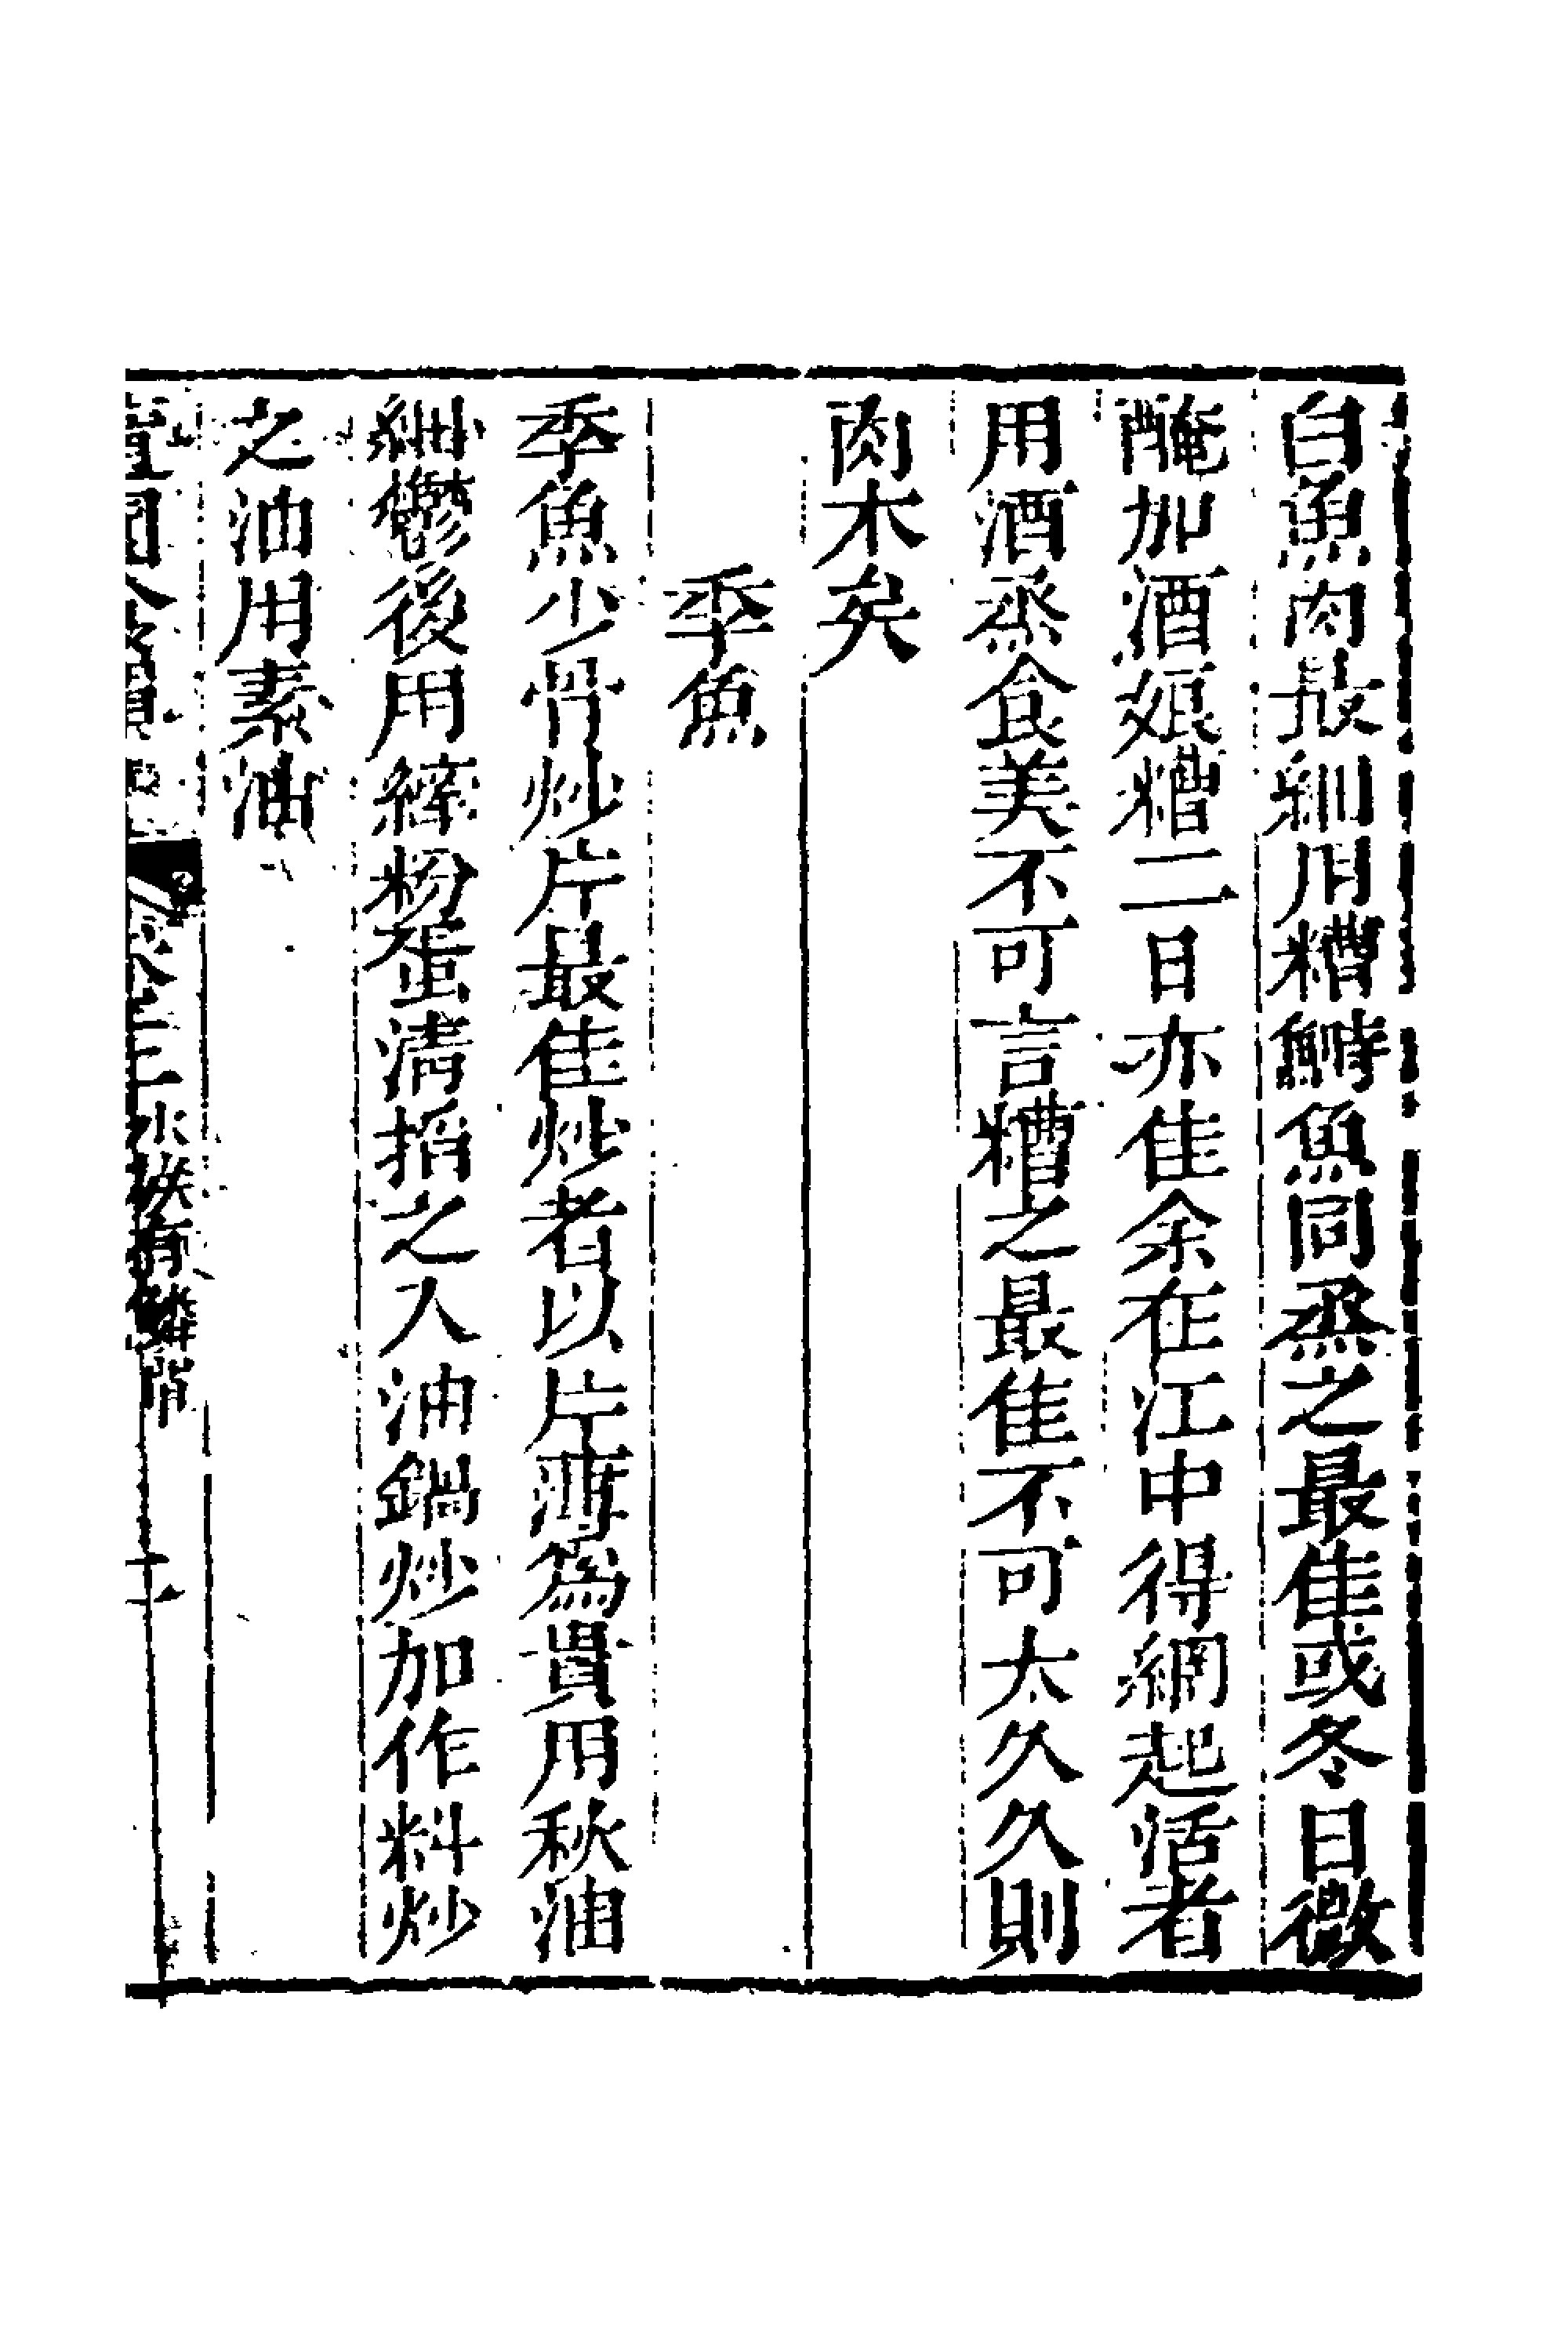 File Suiyuanshidan 2 隨園食單 二 Djvu Wikimedia Commons